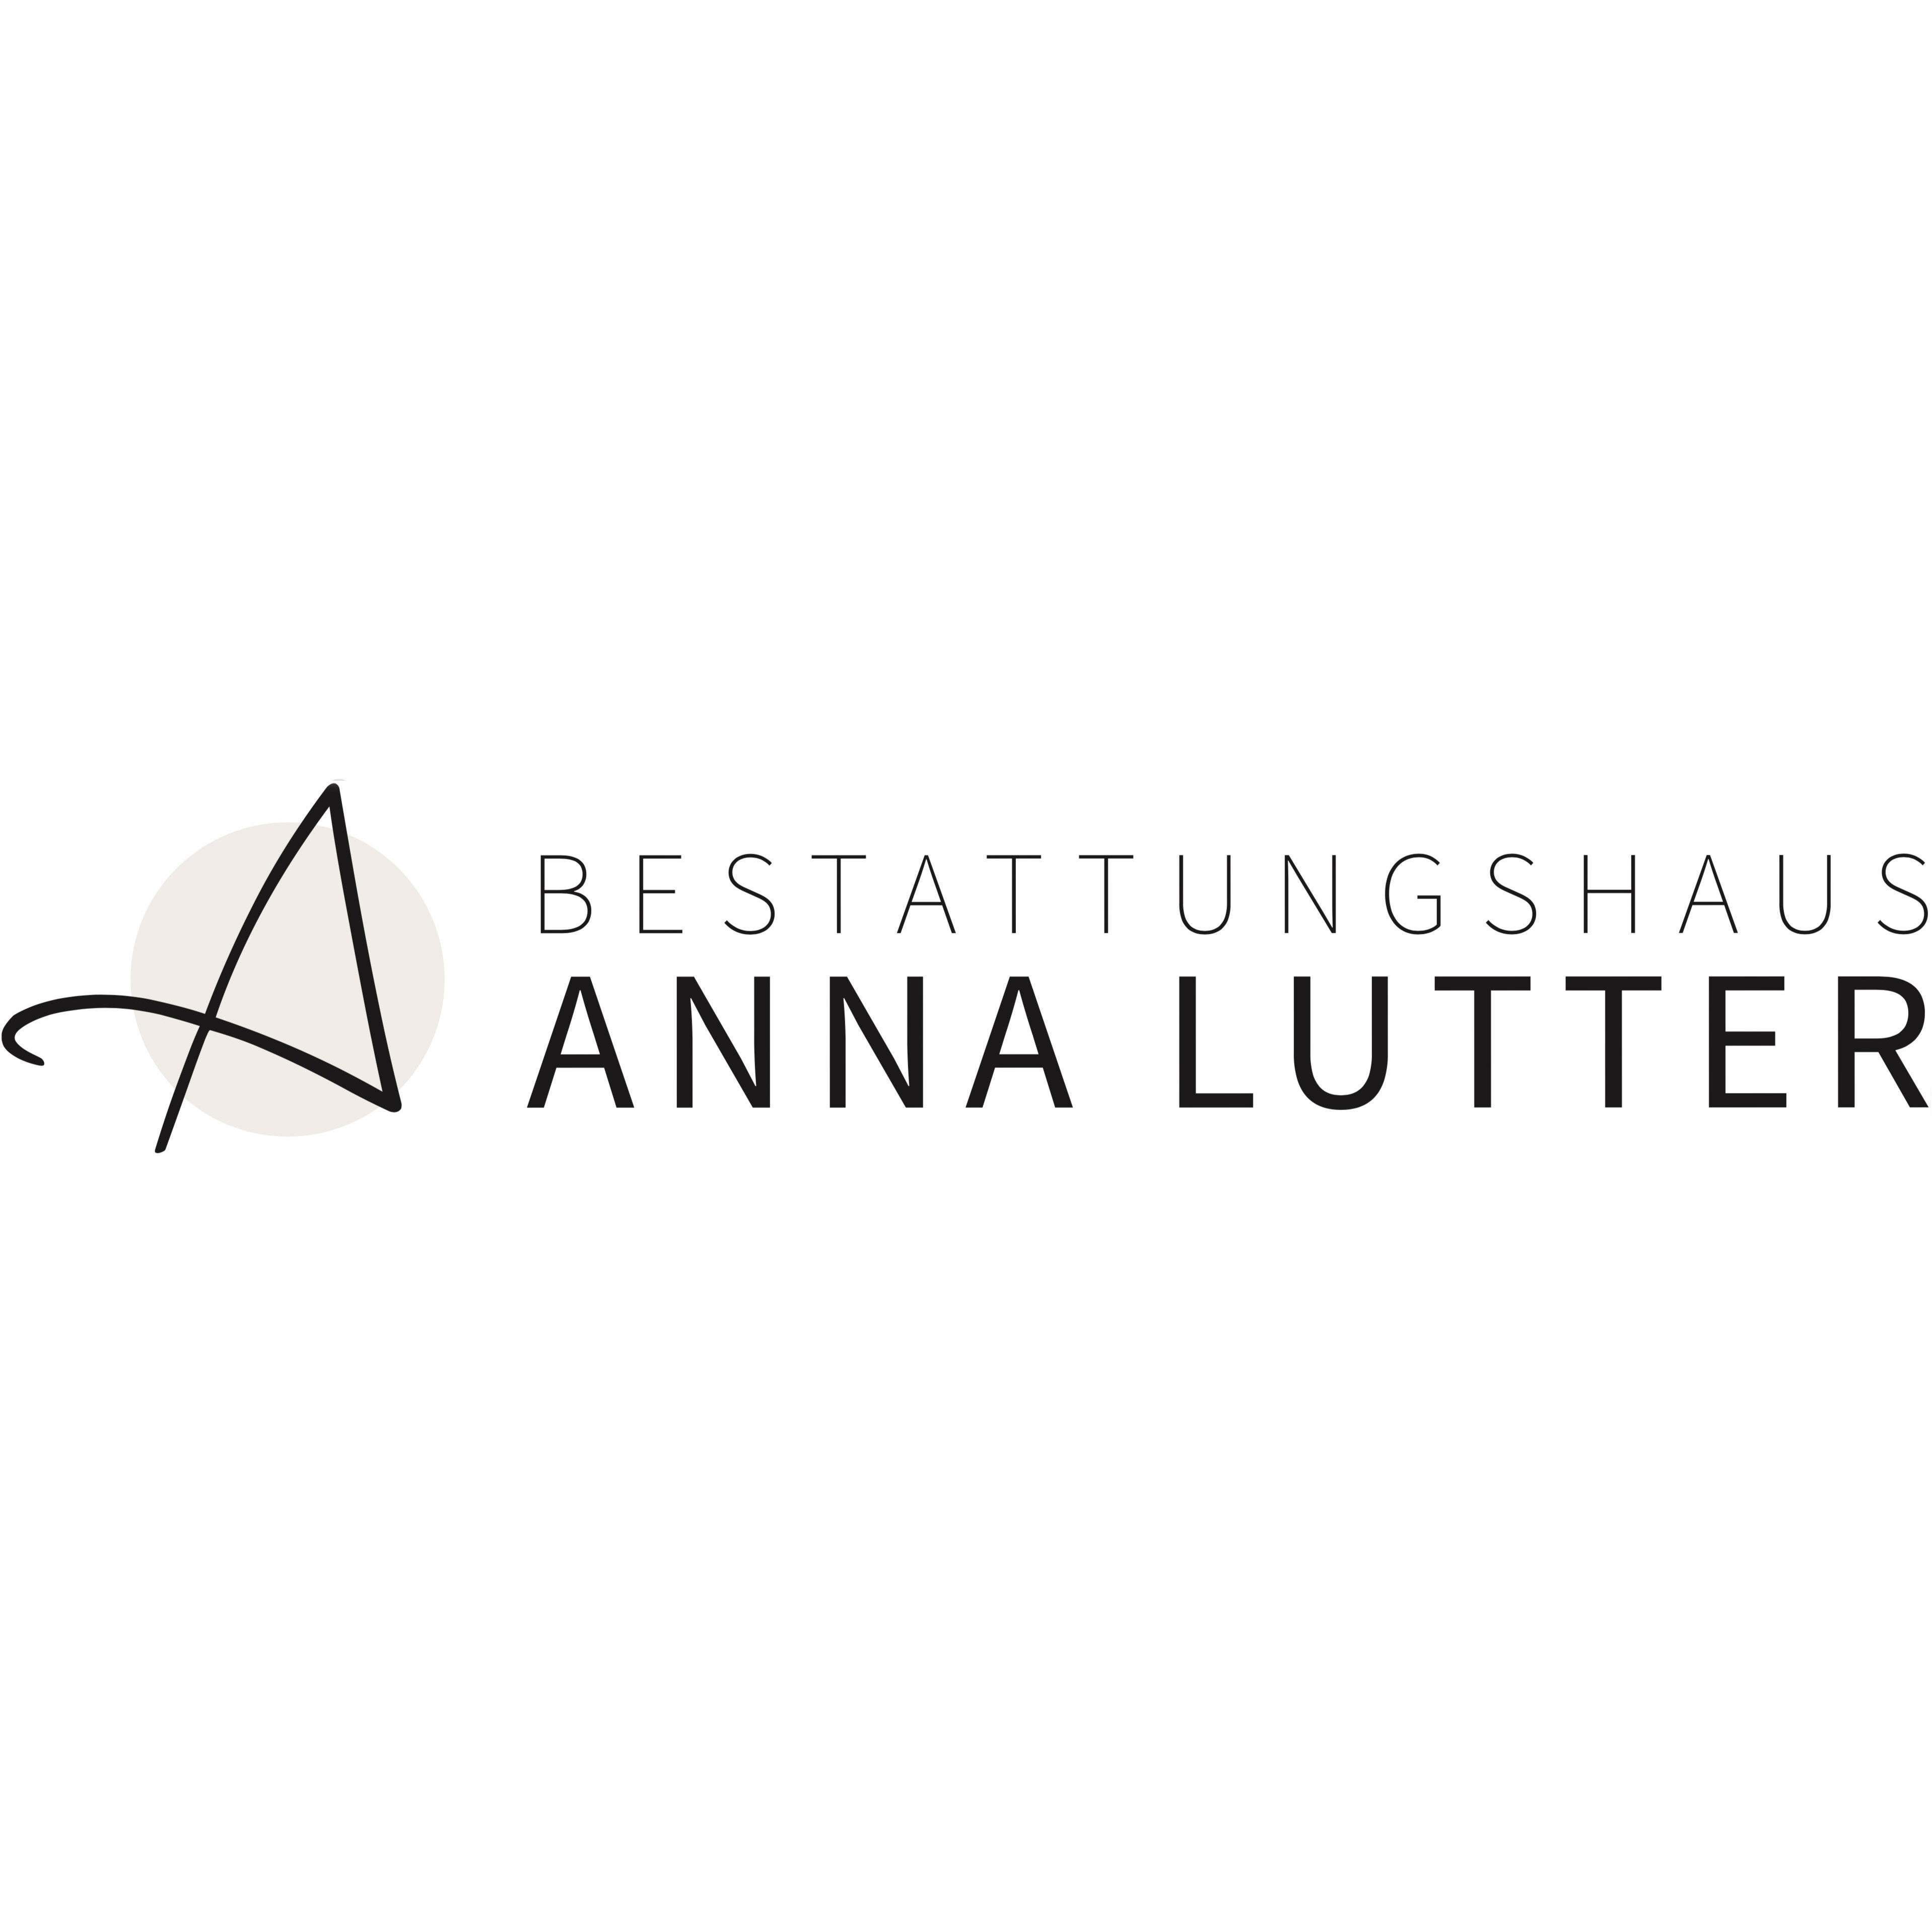 Bestattungshaus Anna Lutter in Neuss - Logo